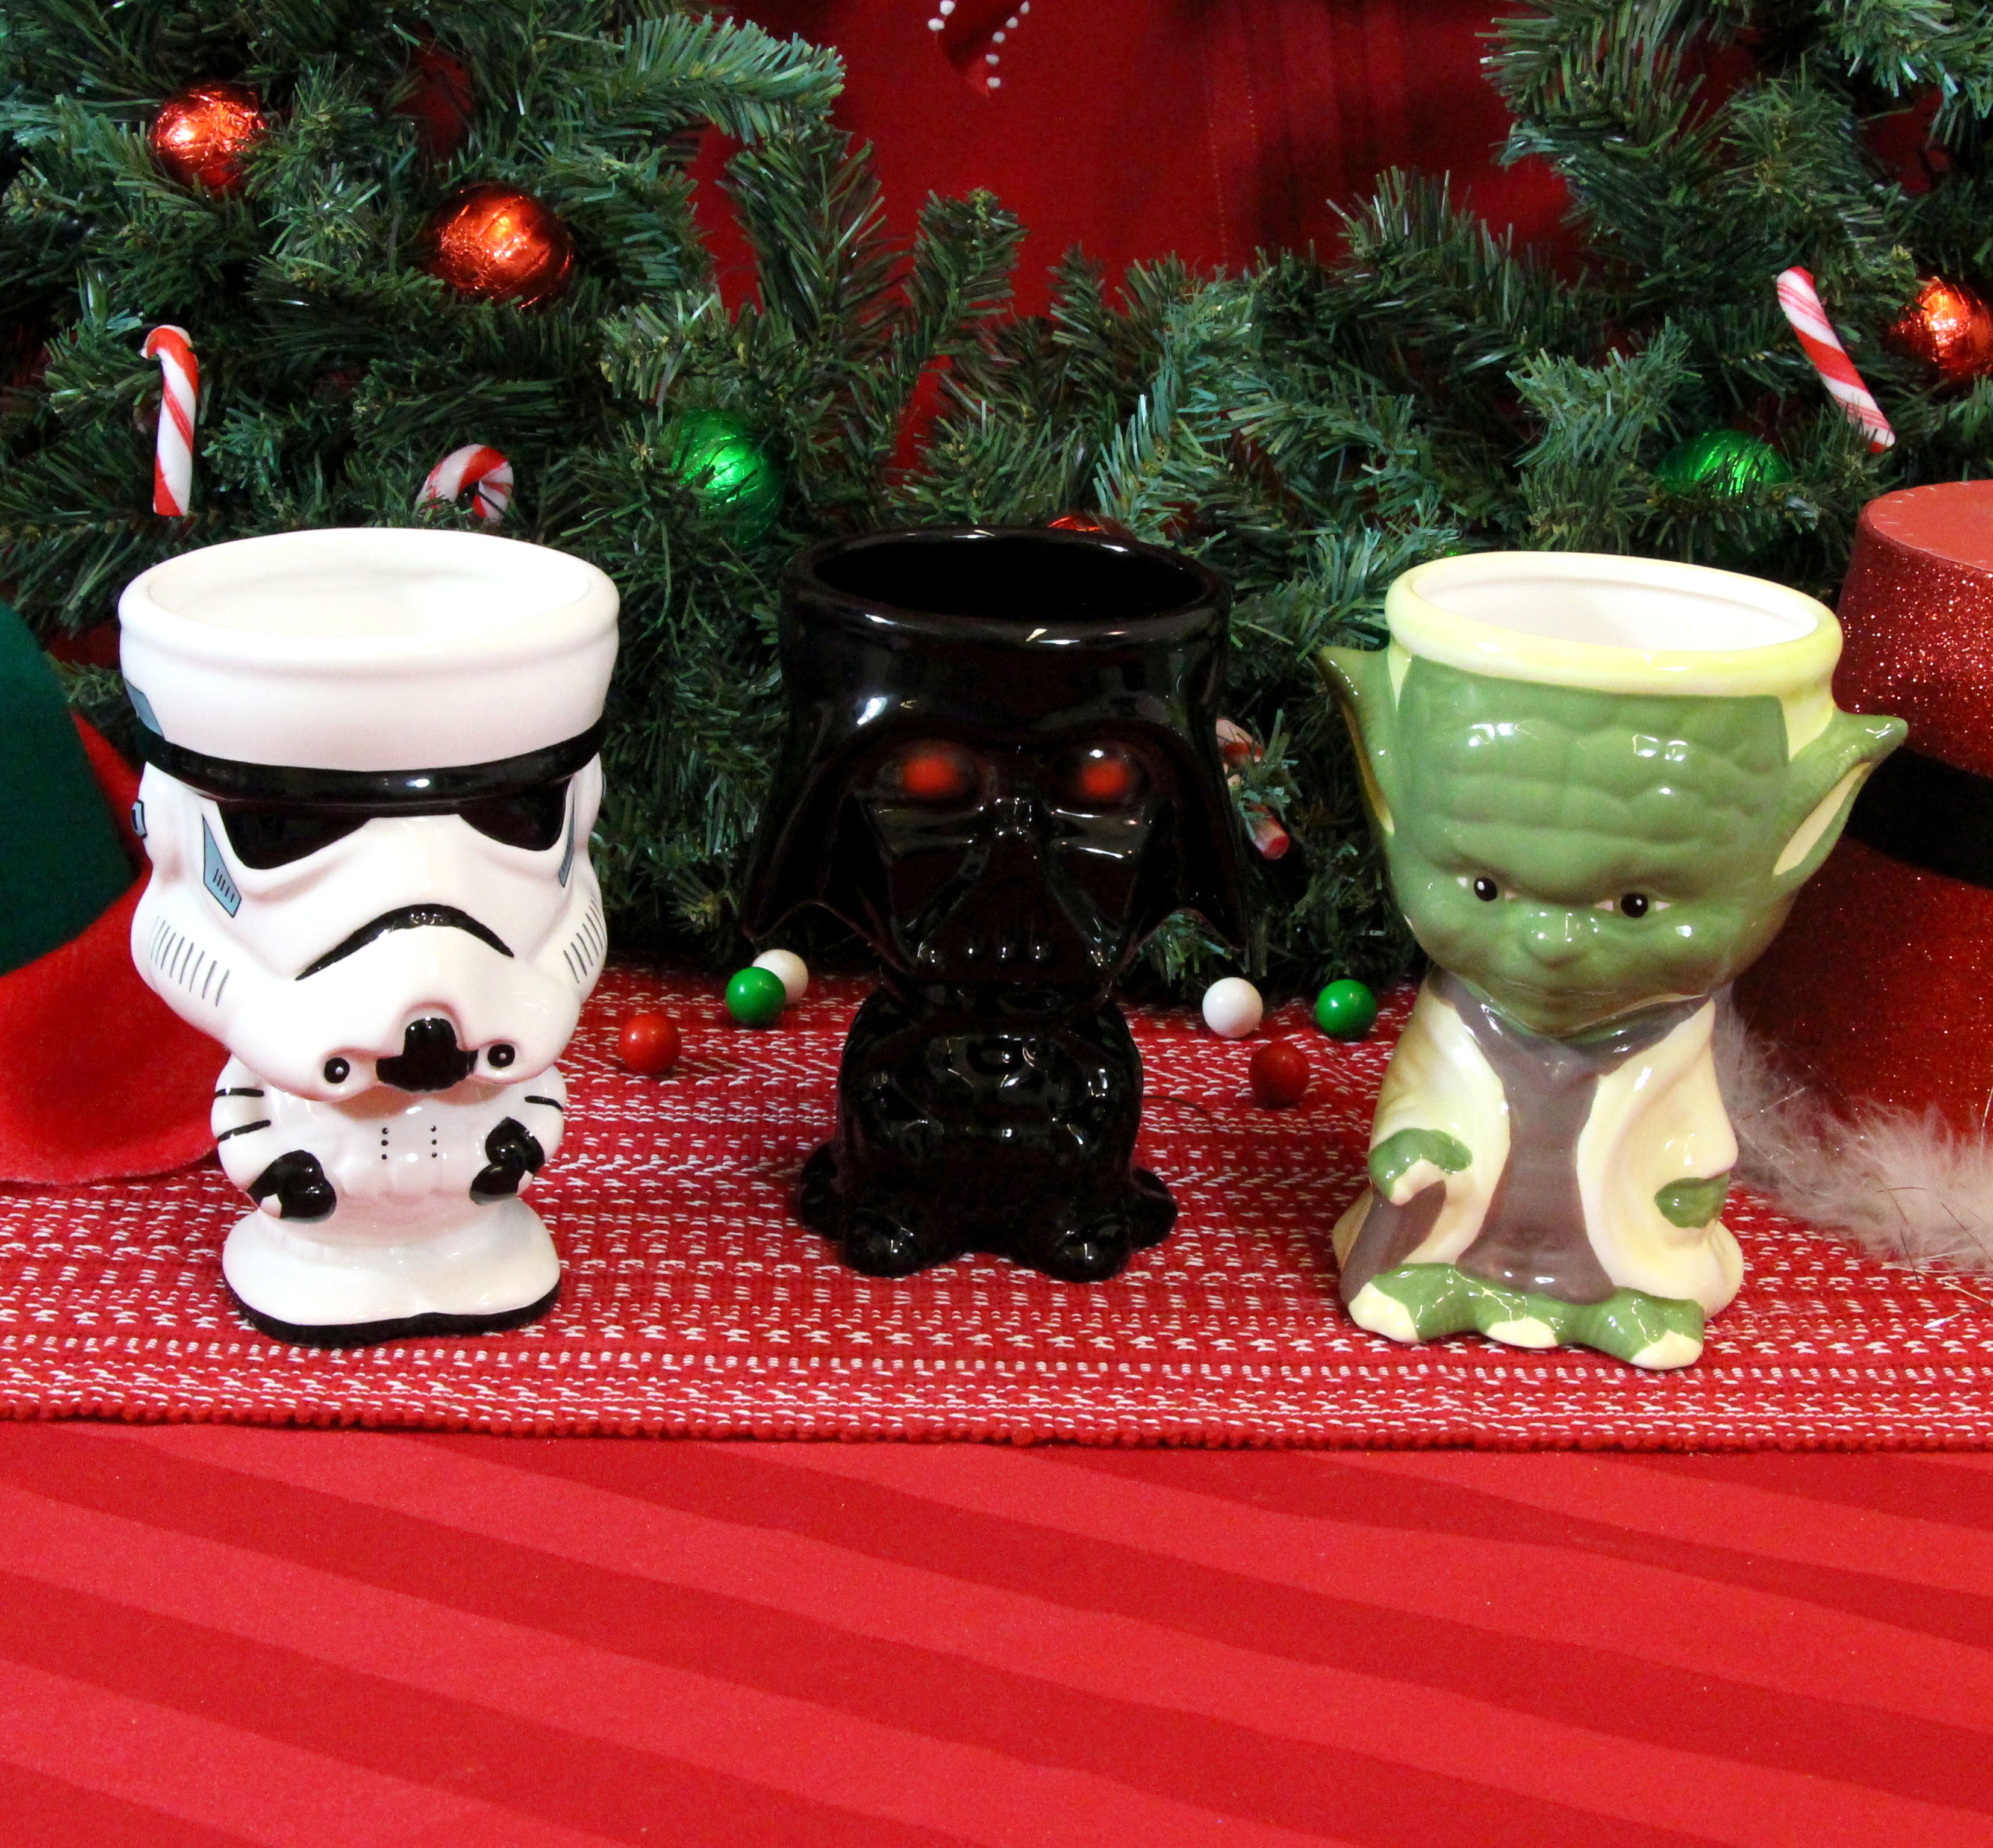 Disney Star Wars Darth Vader Ceramic Collectible Goblet + Chocolate Fudge  Cocoa Mix Set!